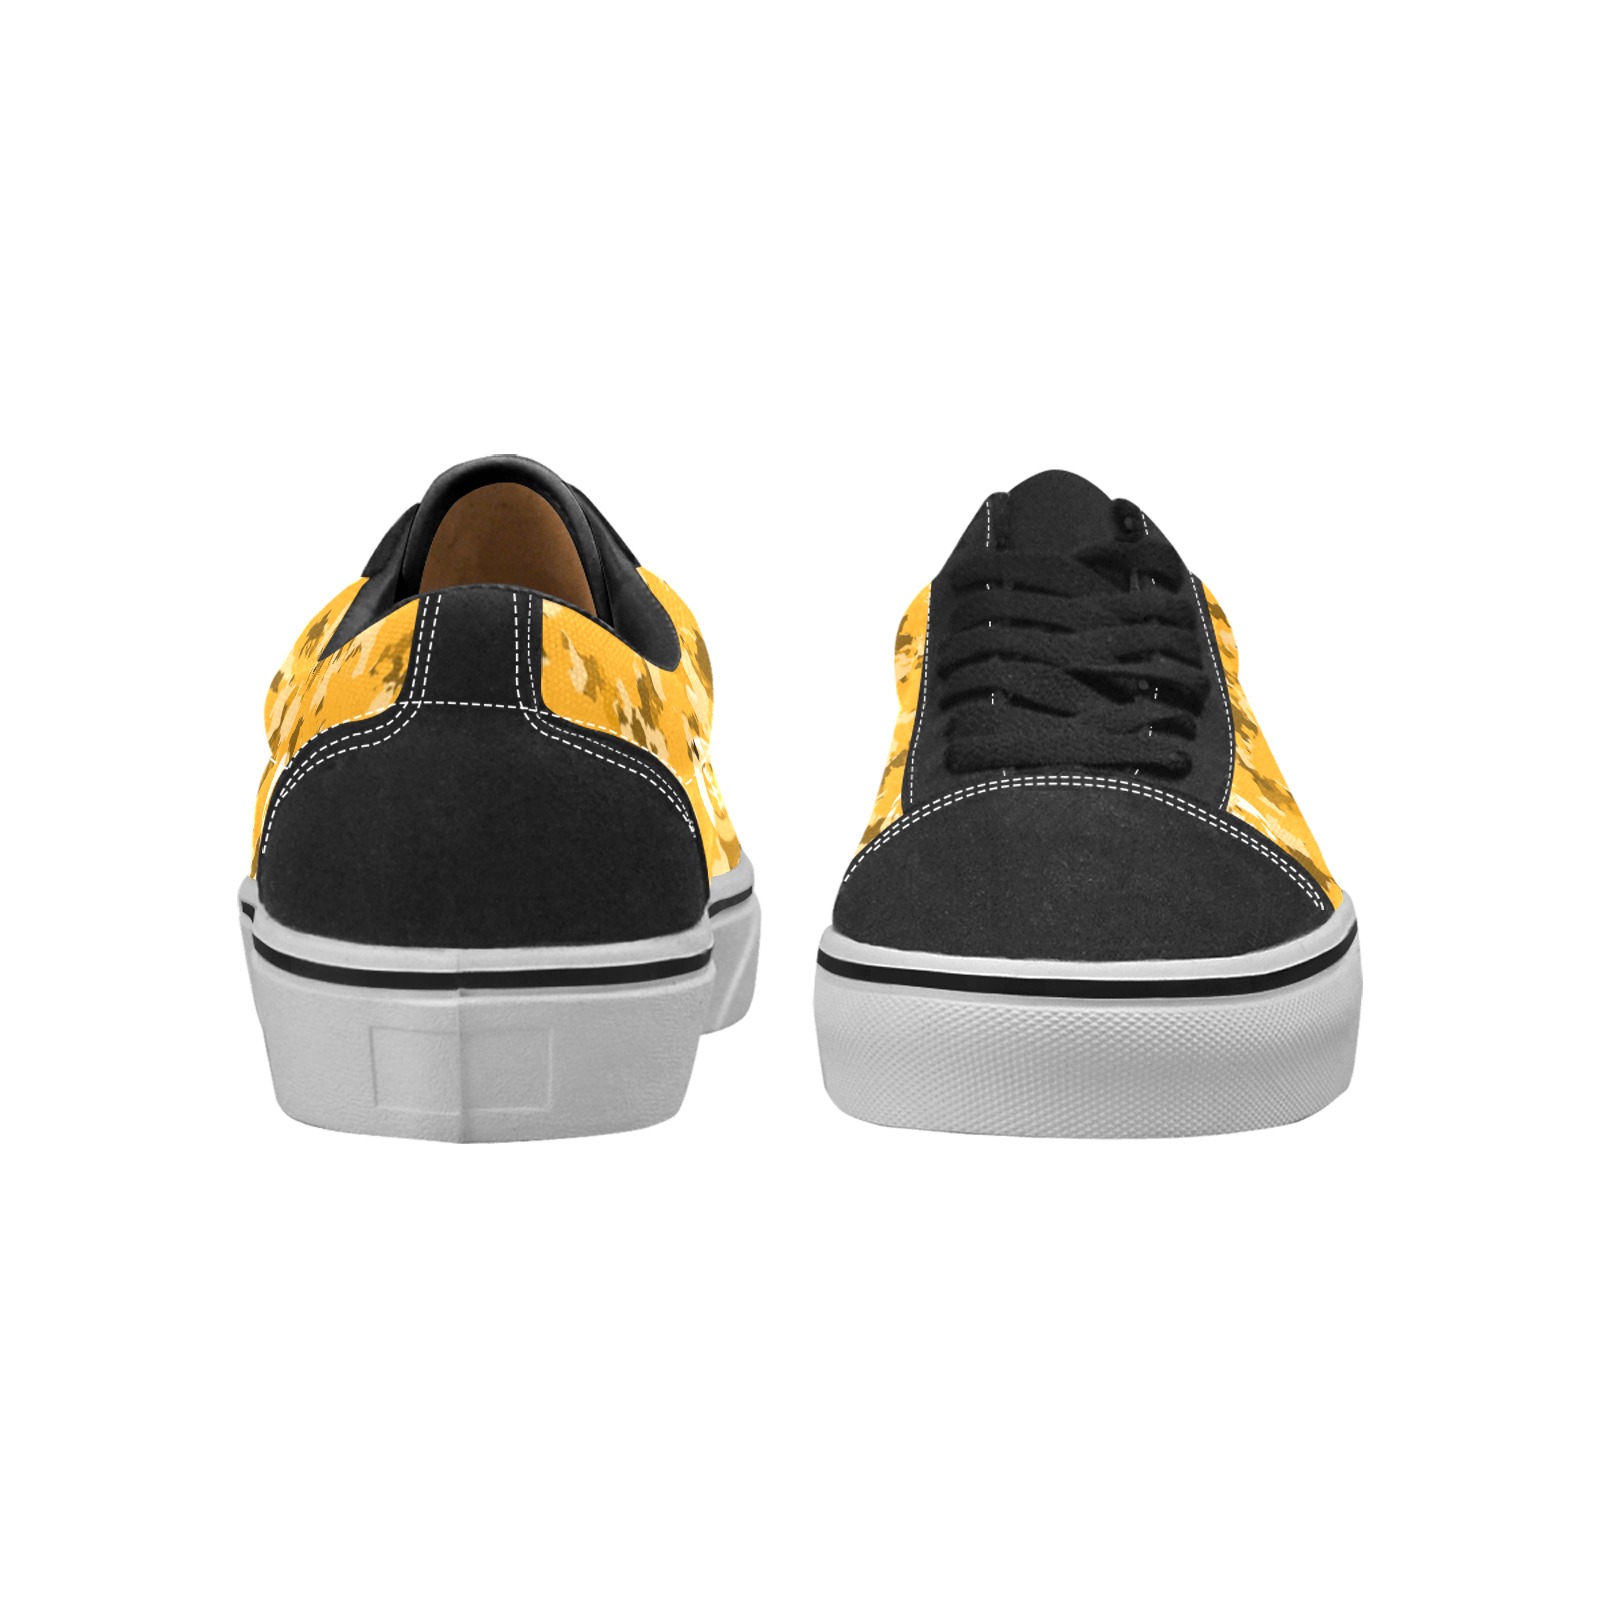 New Project (2) (4) Men's Low Top Skateboarding Shoes (Model E001-2)